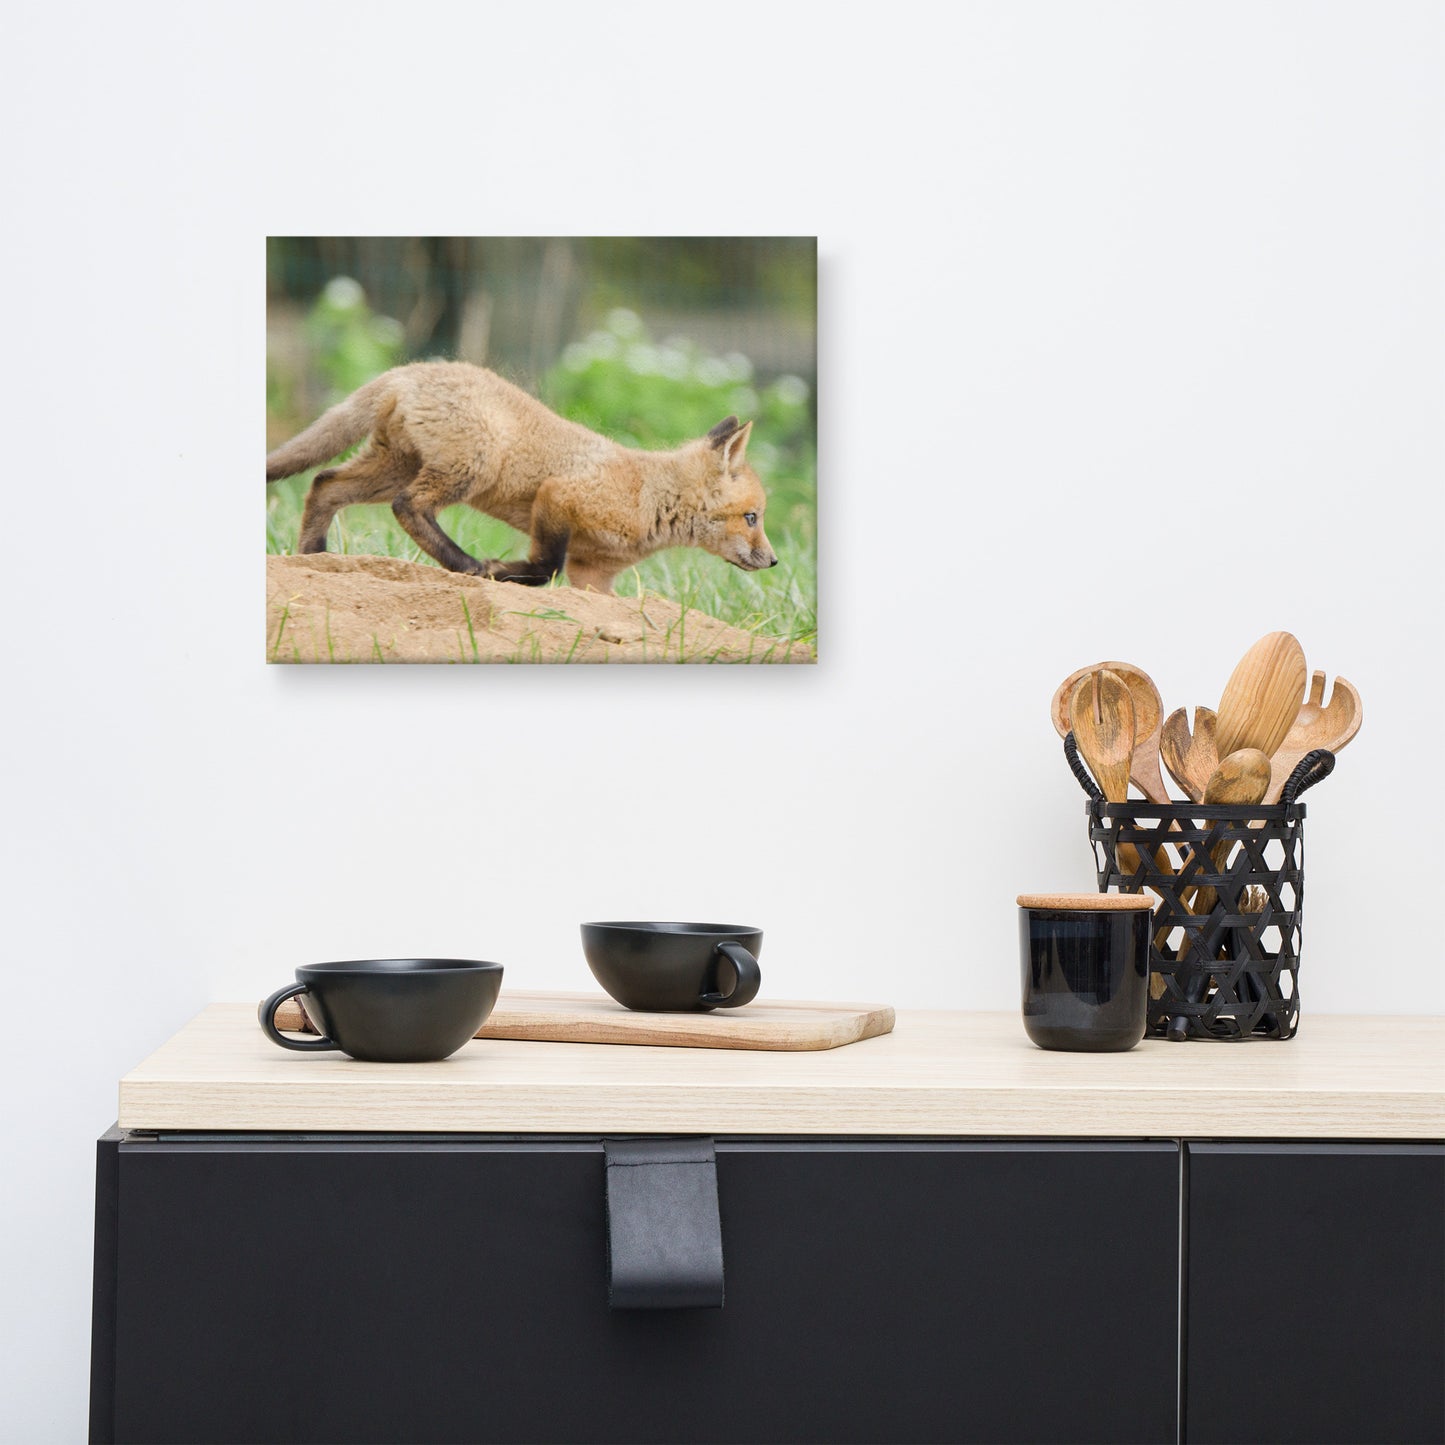 Woodland Nursery Canvas: Fox Pup In Meadow Animal / Wildlife / Nature Photograph Canvas Wall Art Print - Artwork - Wall Decor